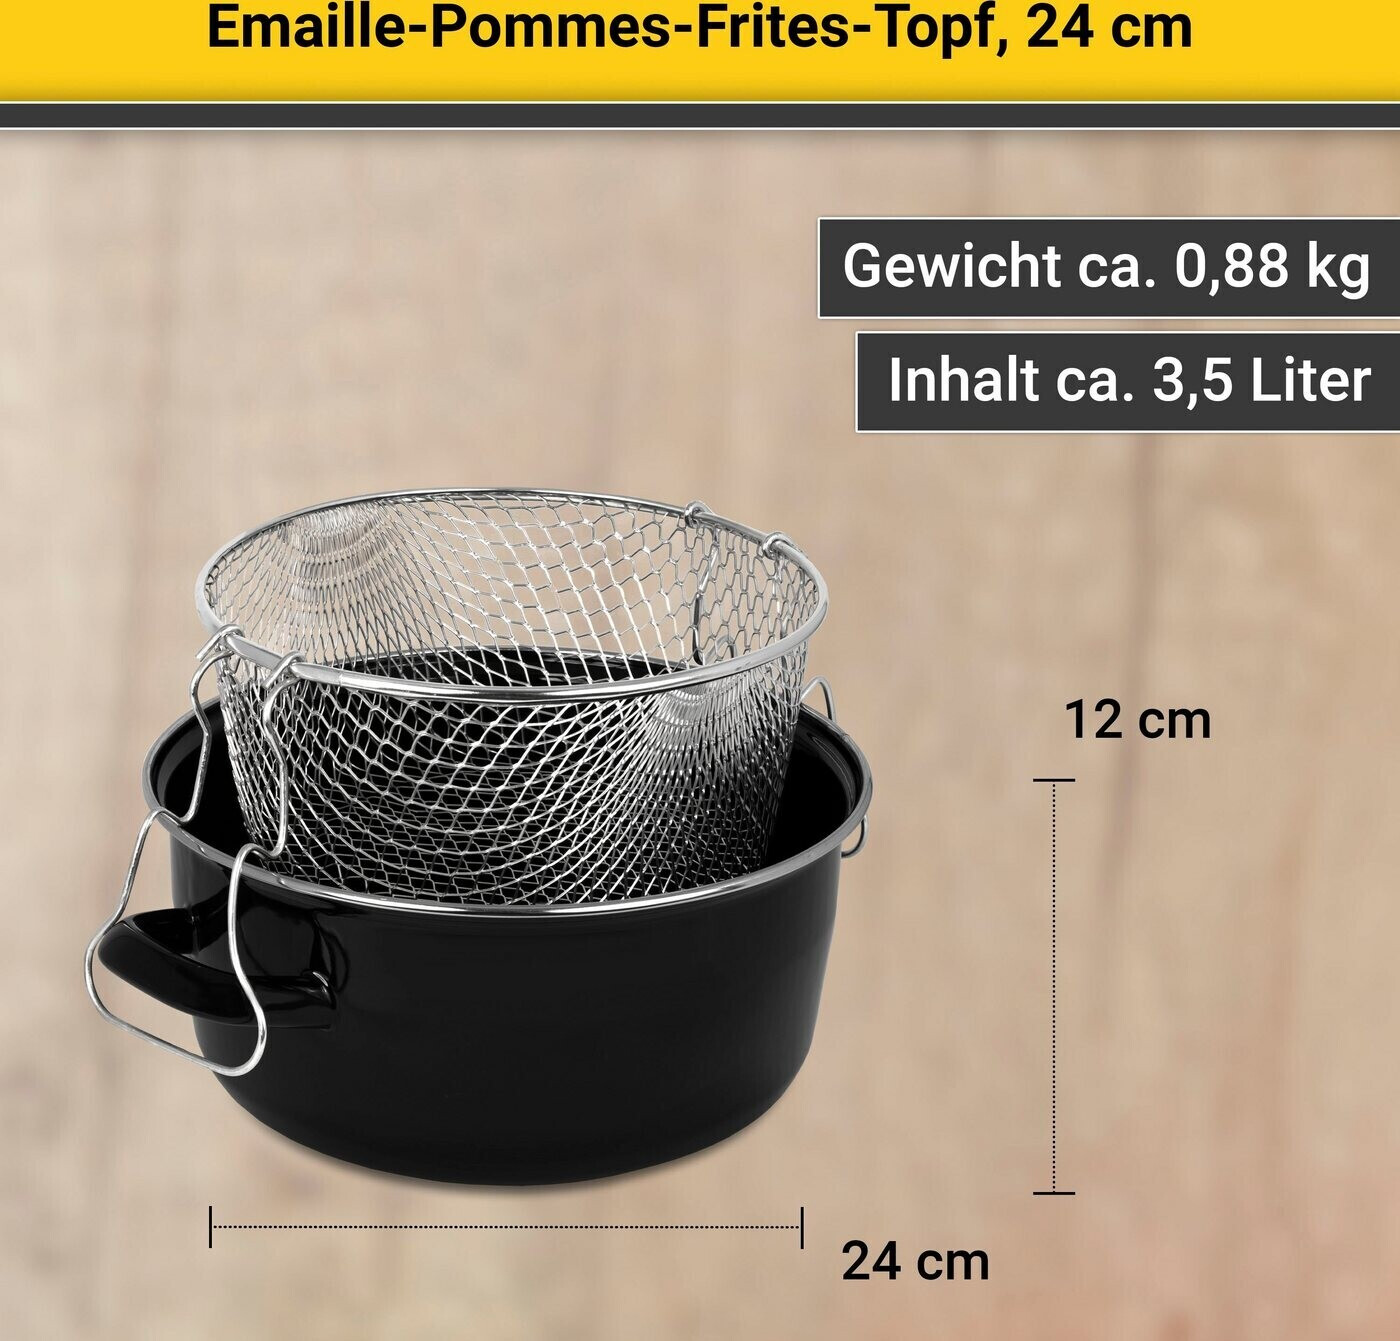 € | Krüger 24 Preisvergleich ab cm 16,10 Pommes-Frites-Topf bei